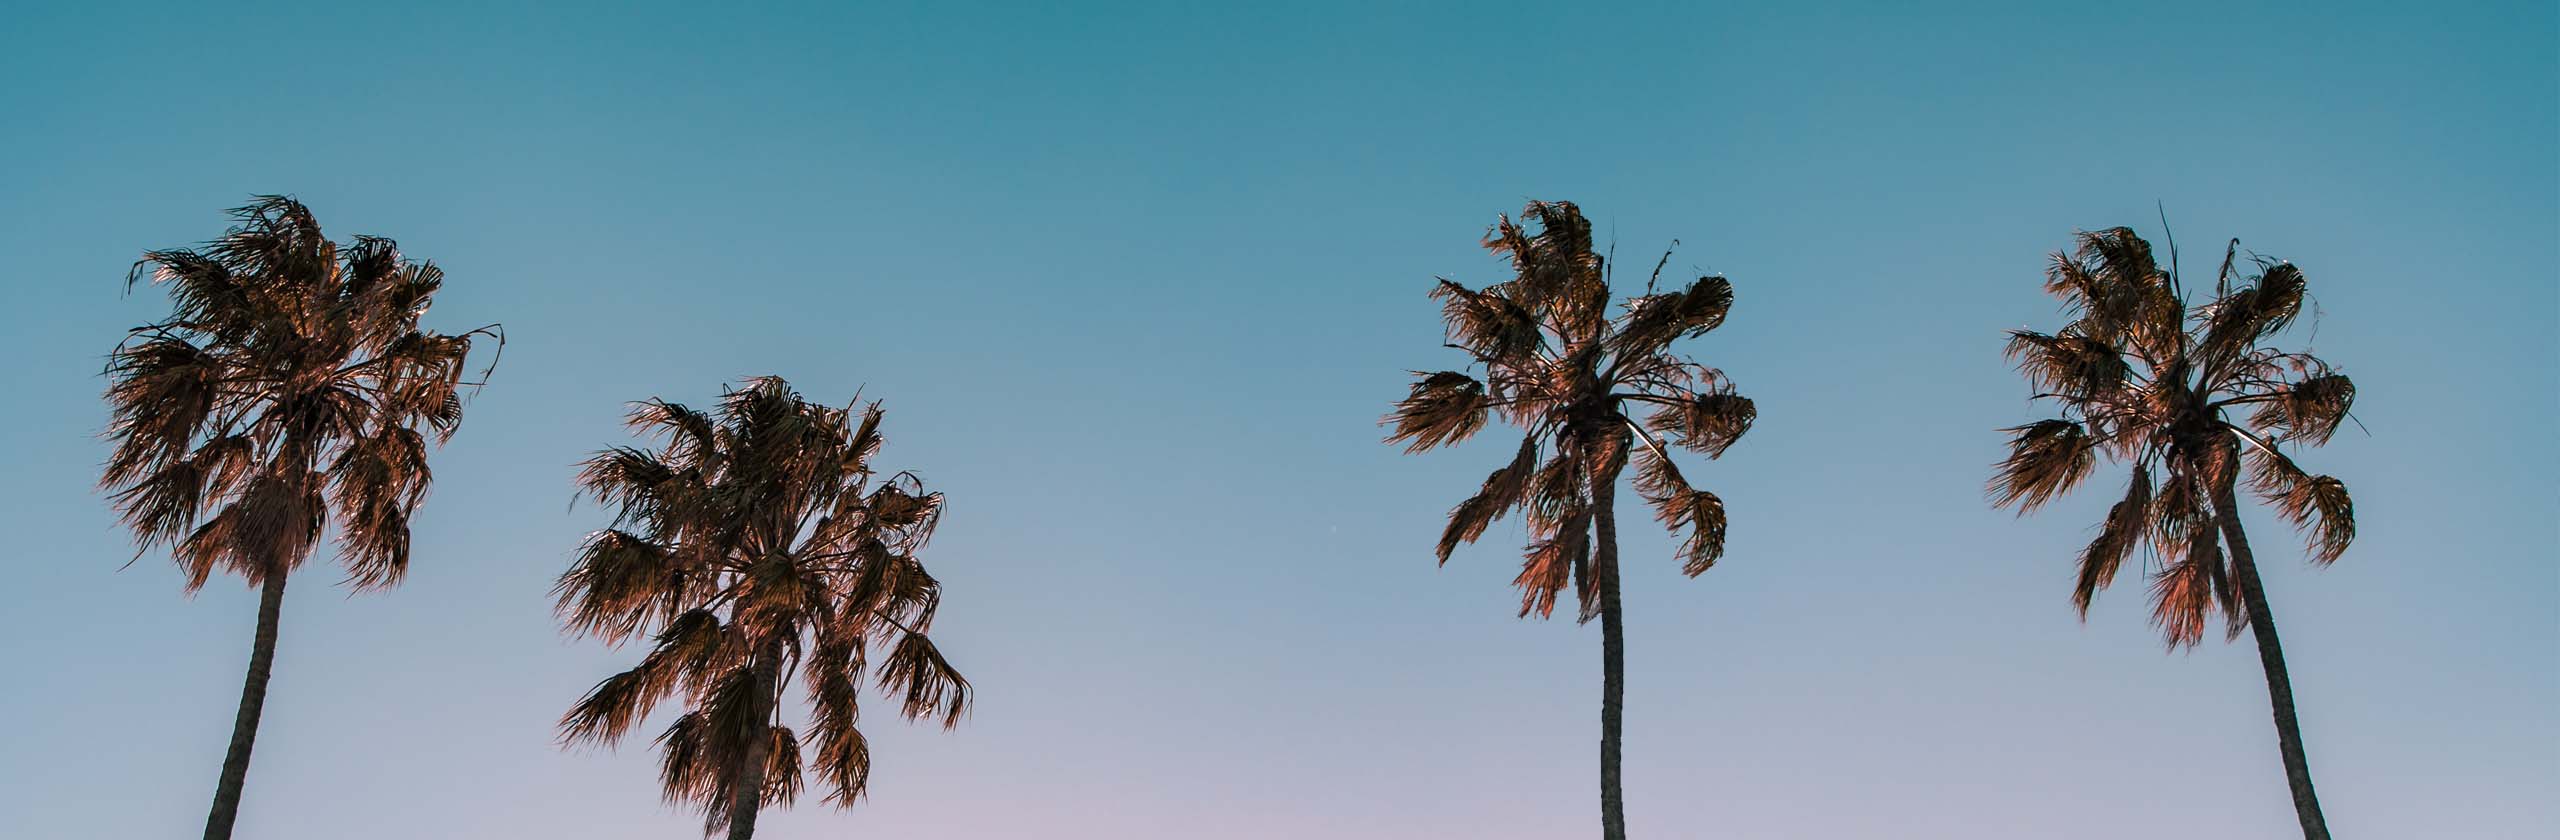 los angeles palm trees